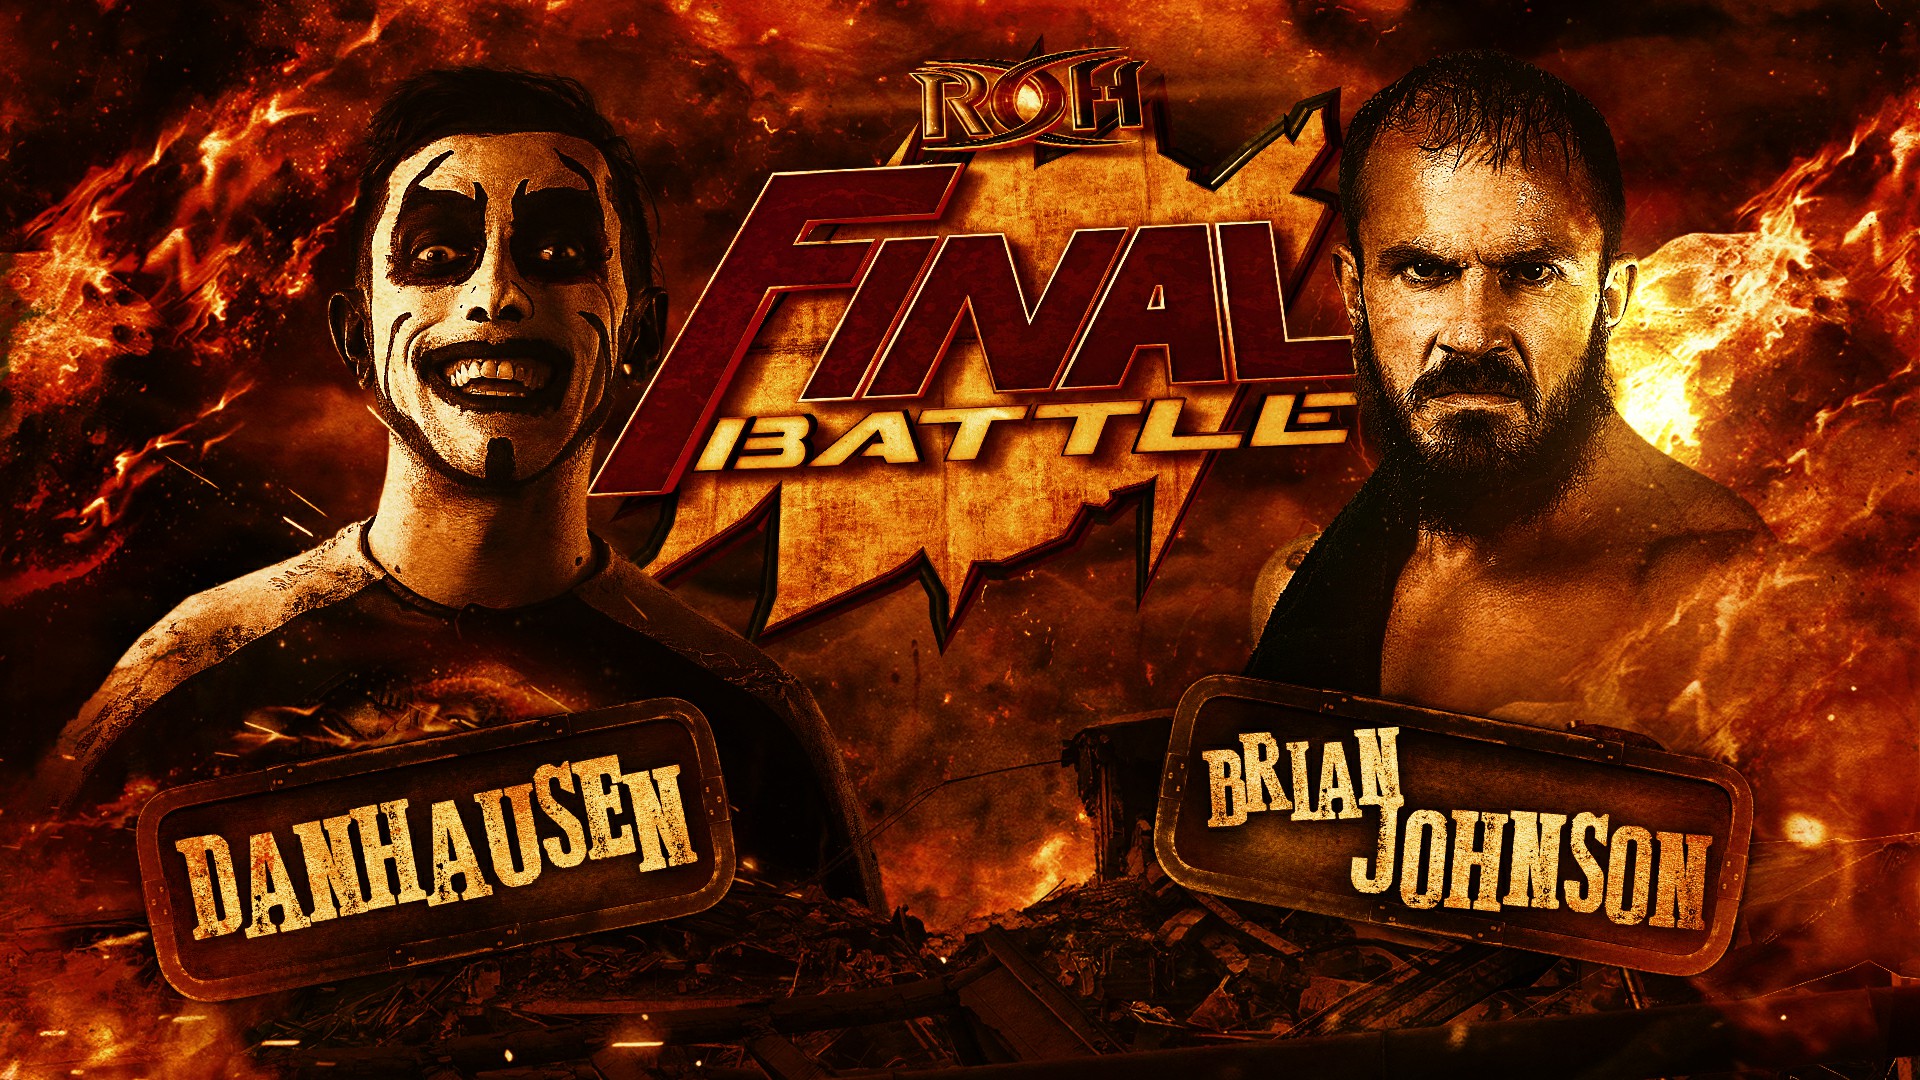 "The Mecca" Brian Johnson vs Danhausen at Final Battle 2020 title screen